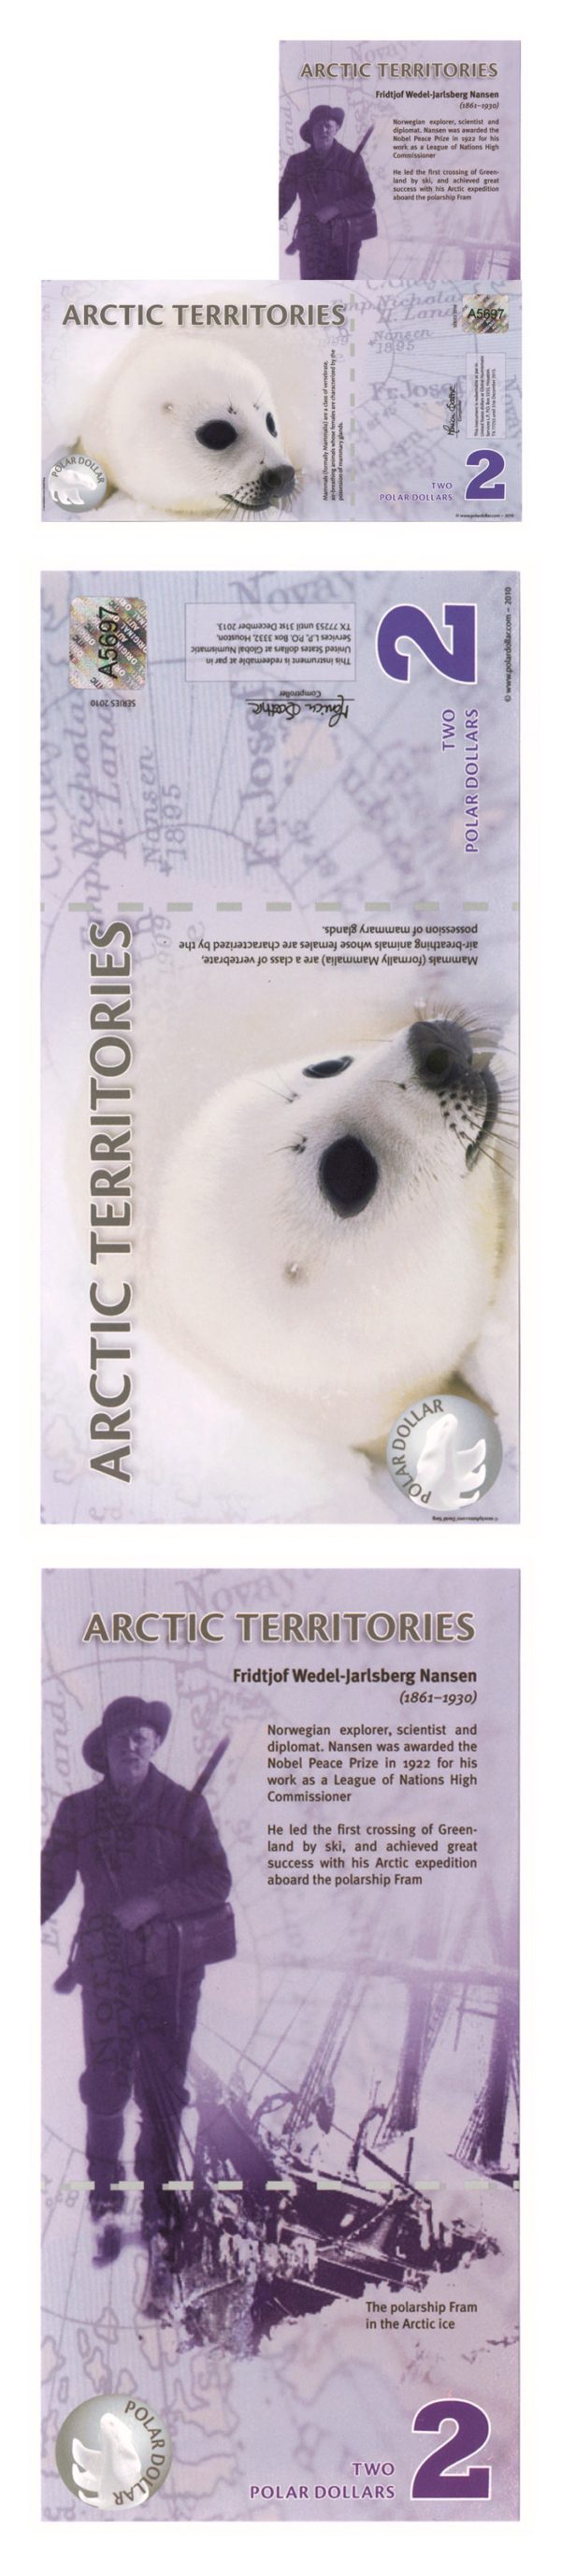 Arctic Territories - Polar Dollars - Seal - $2 - 2010  - Polymer Banknote - Crisp Uncirculated